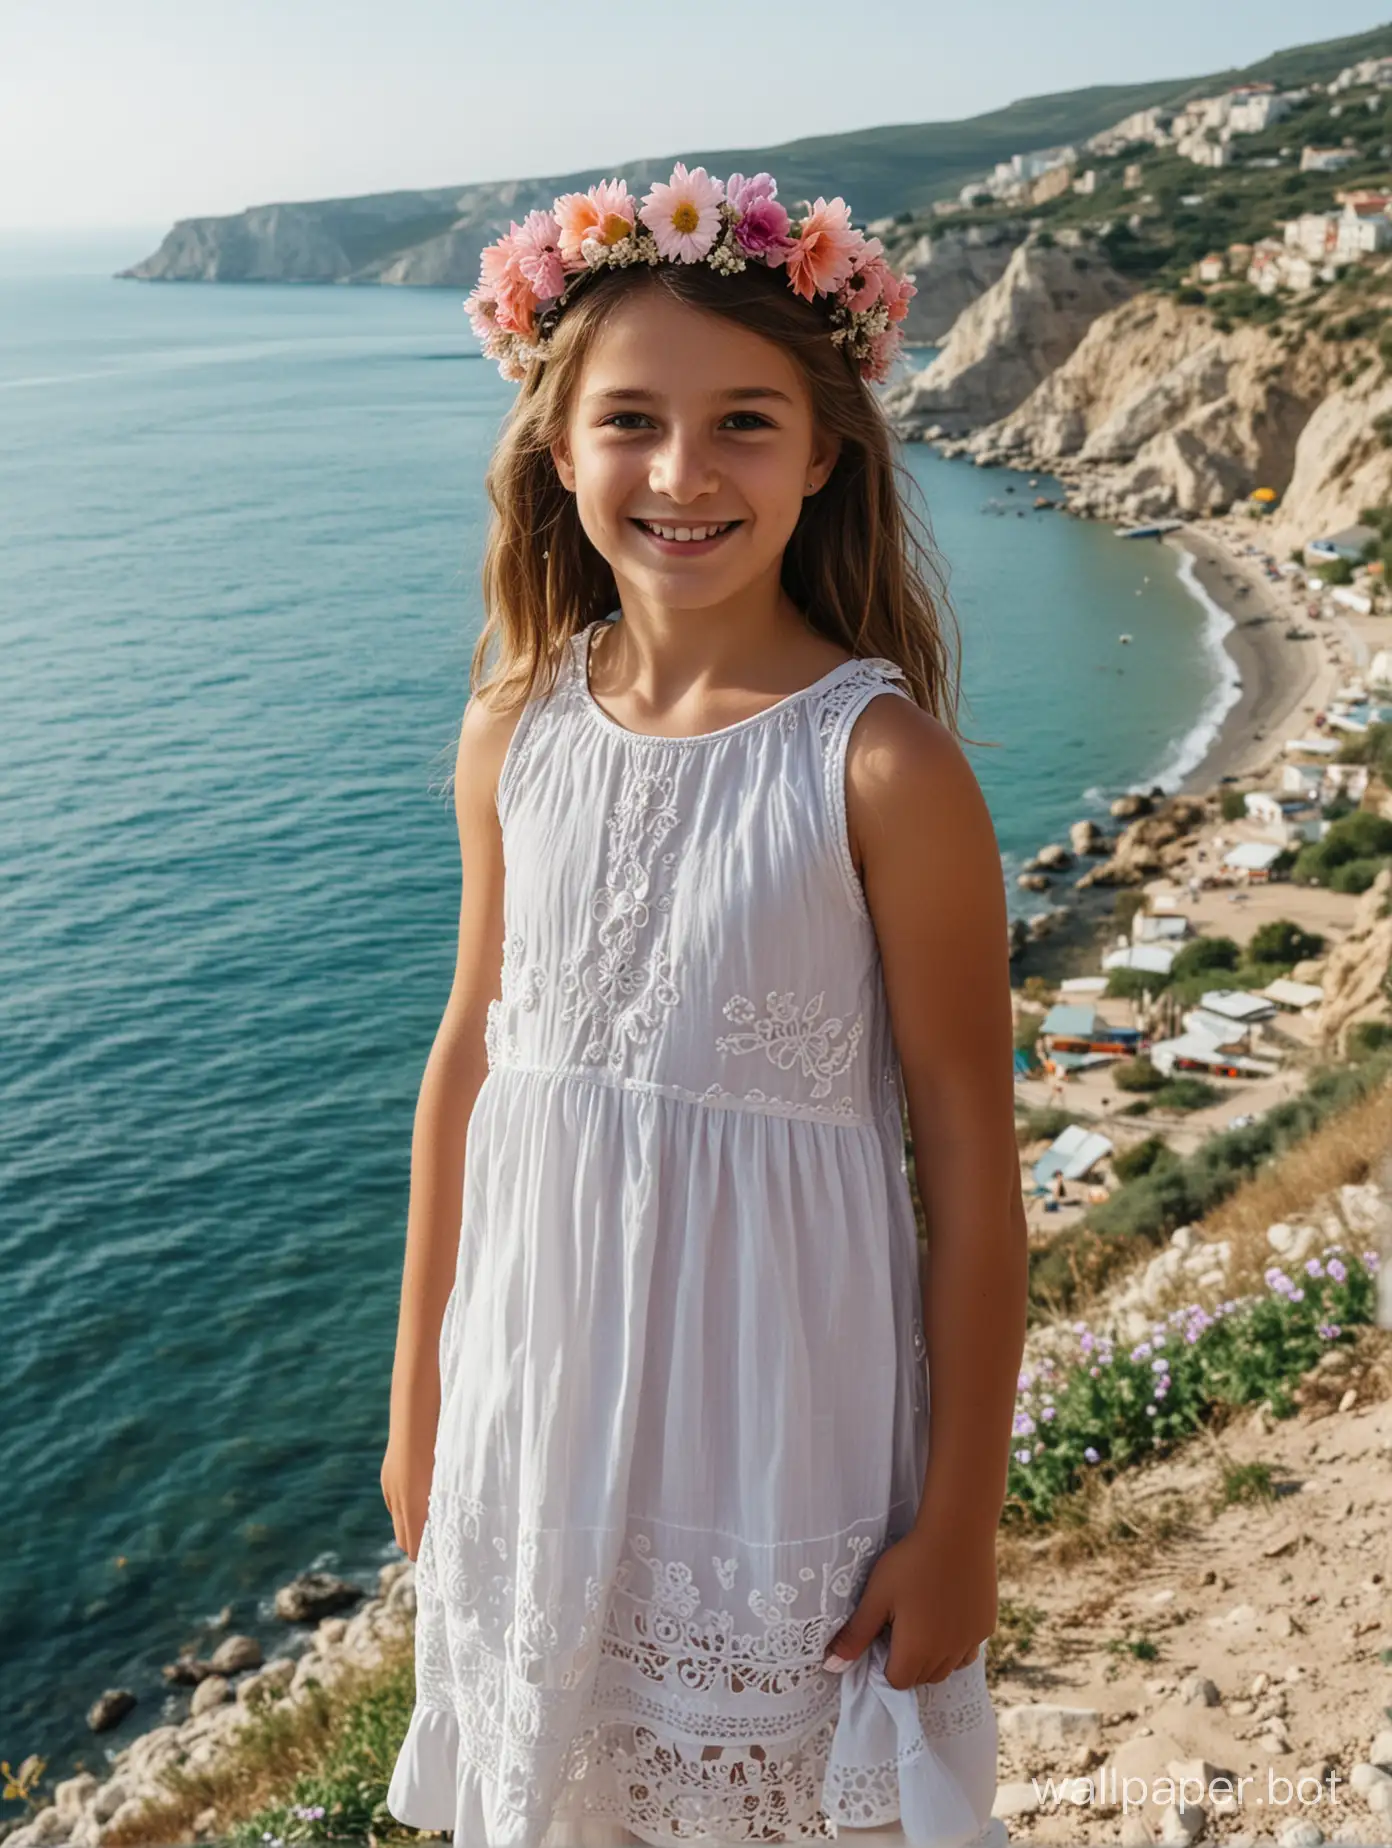 Joyful-11YearOld-Girl-in-Floral-Crown-Overlooking-Crimeas-Coastal-Beauty